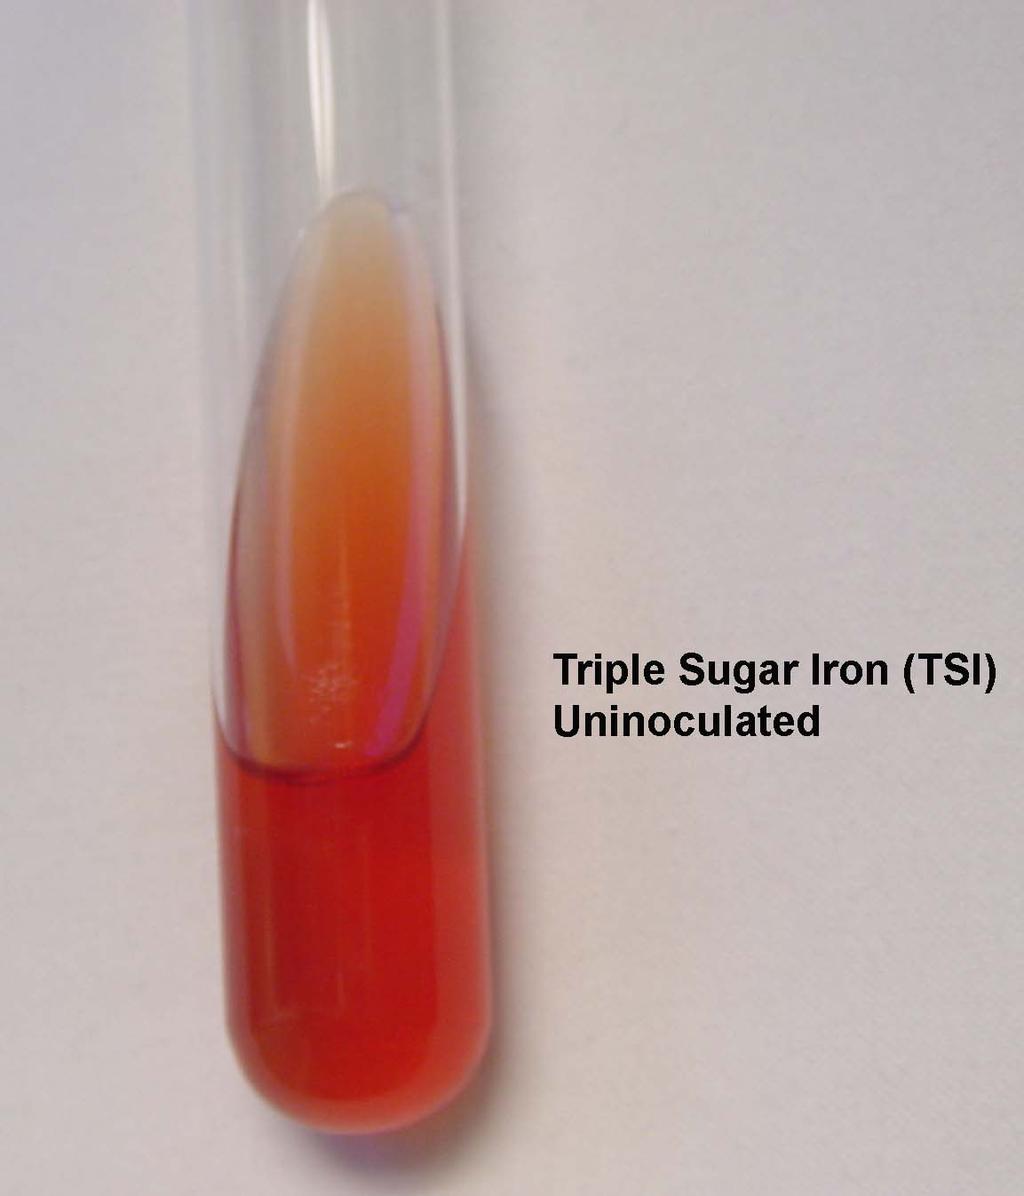 TSI (Triple Sugar Iron Agar) Purpose: To differentiate bacteria based on their ability